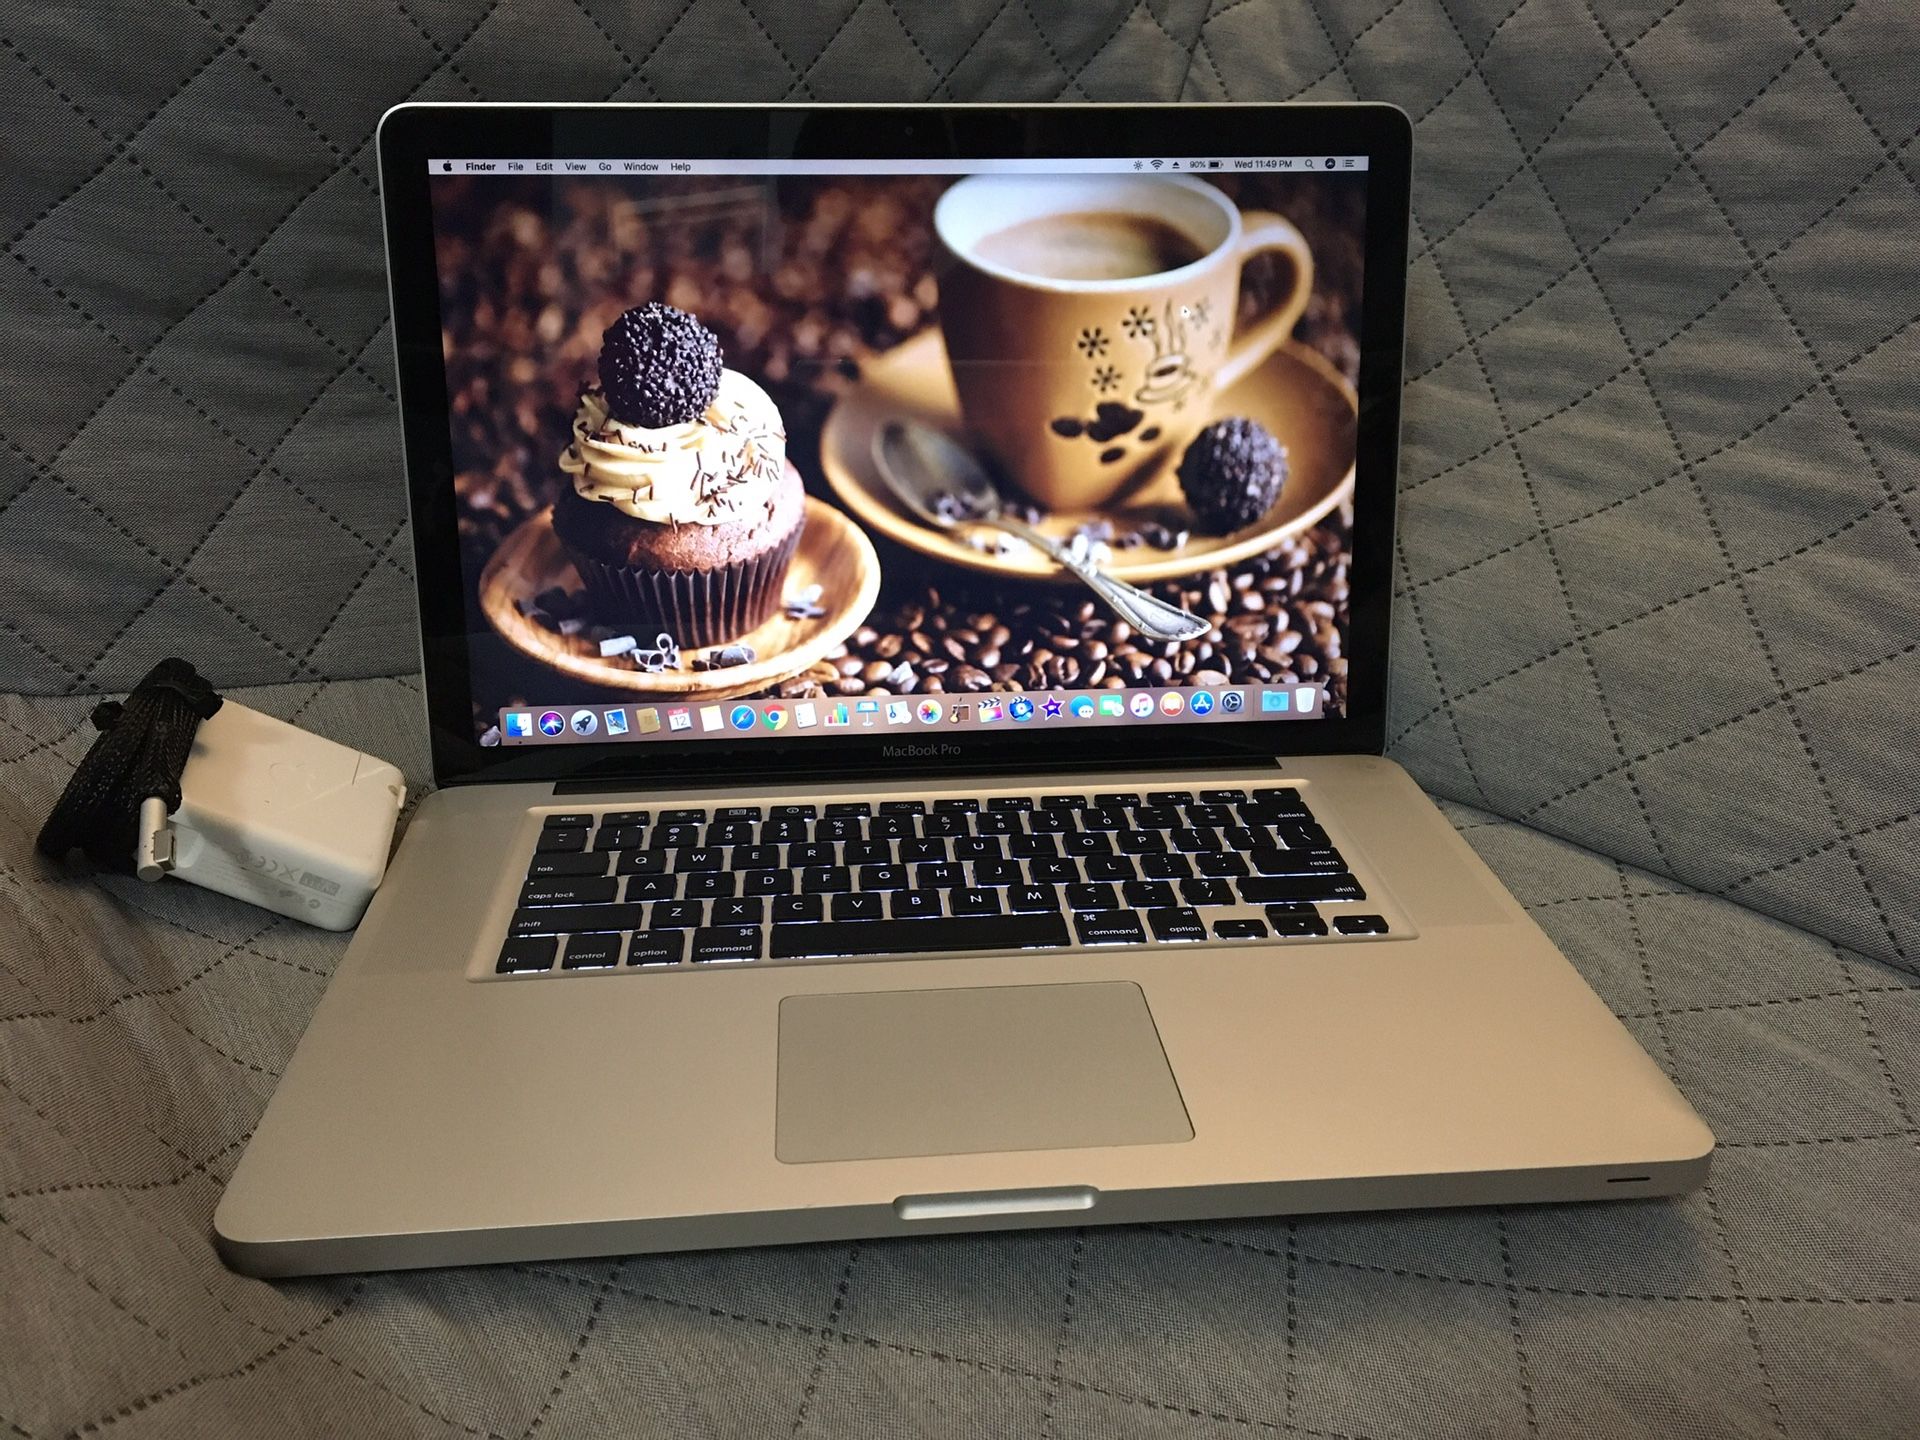 Apple MacBook Pro 15-Inch 2GHz Intel "Core i7" 4GB RAM 128GB SSD (Late-2011)